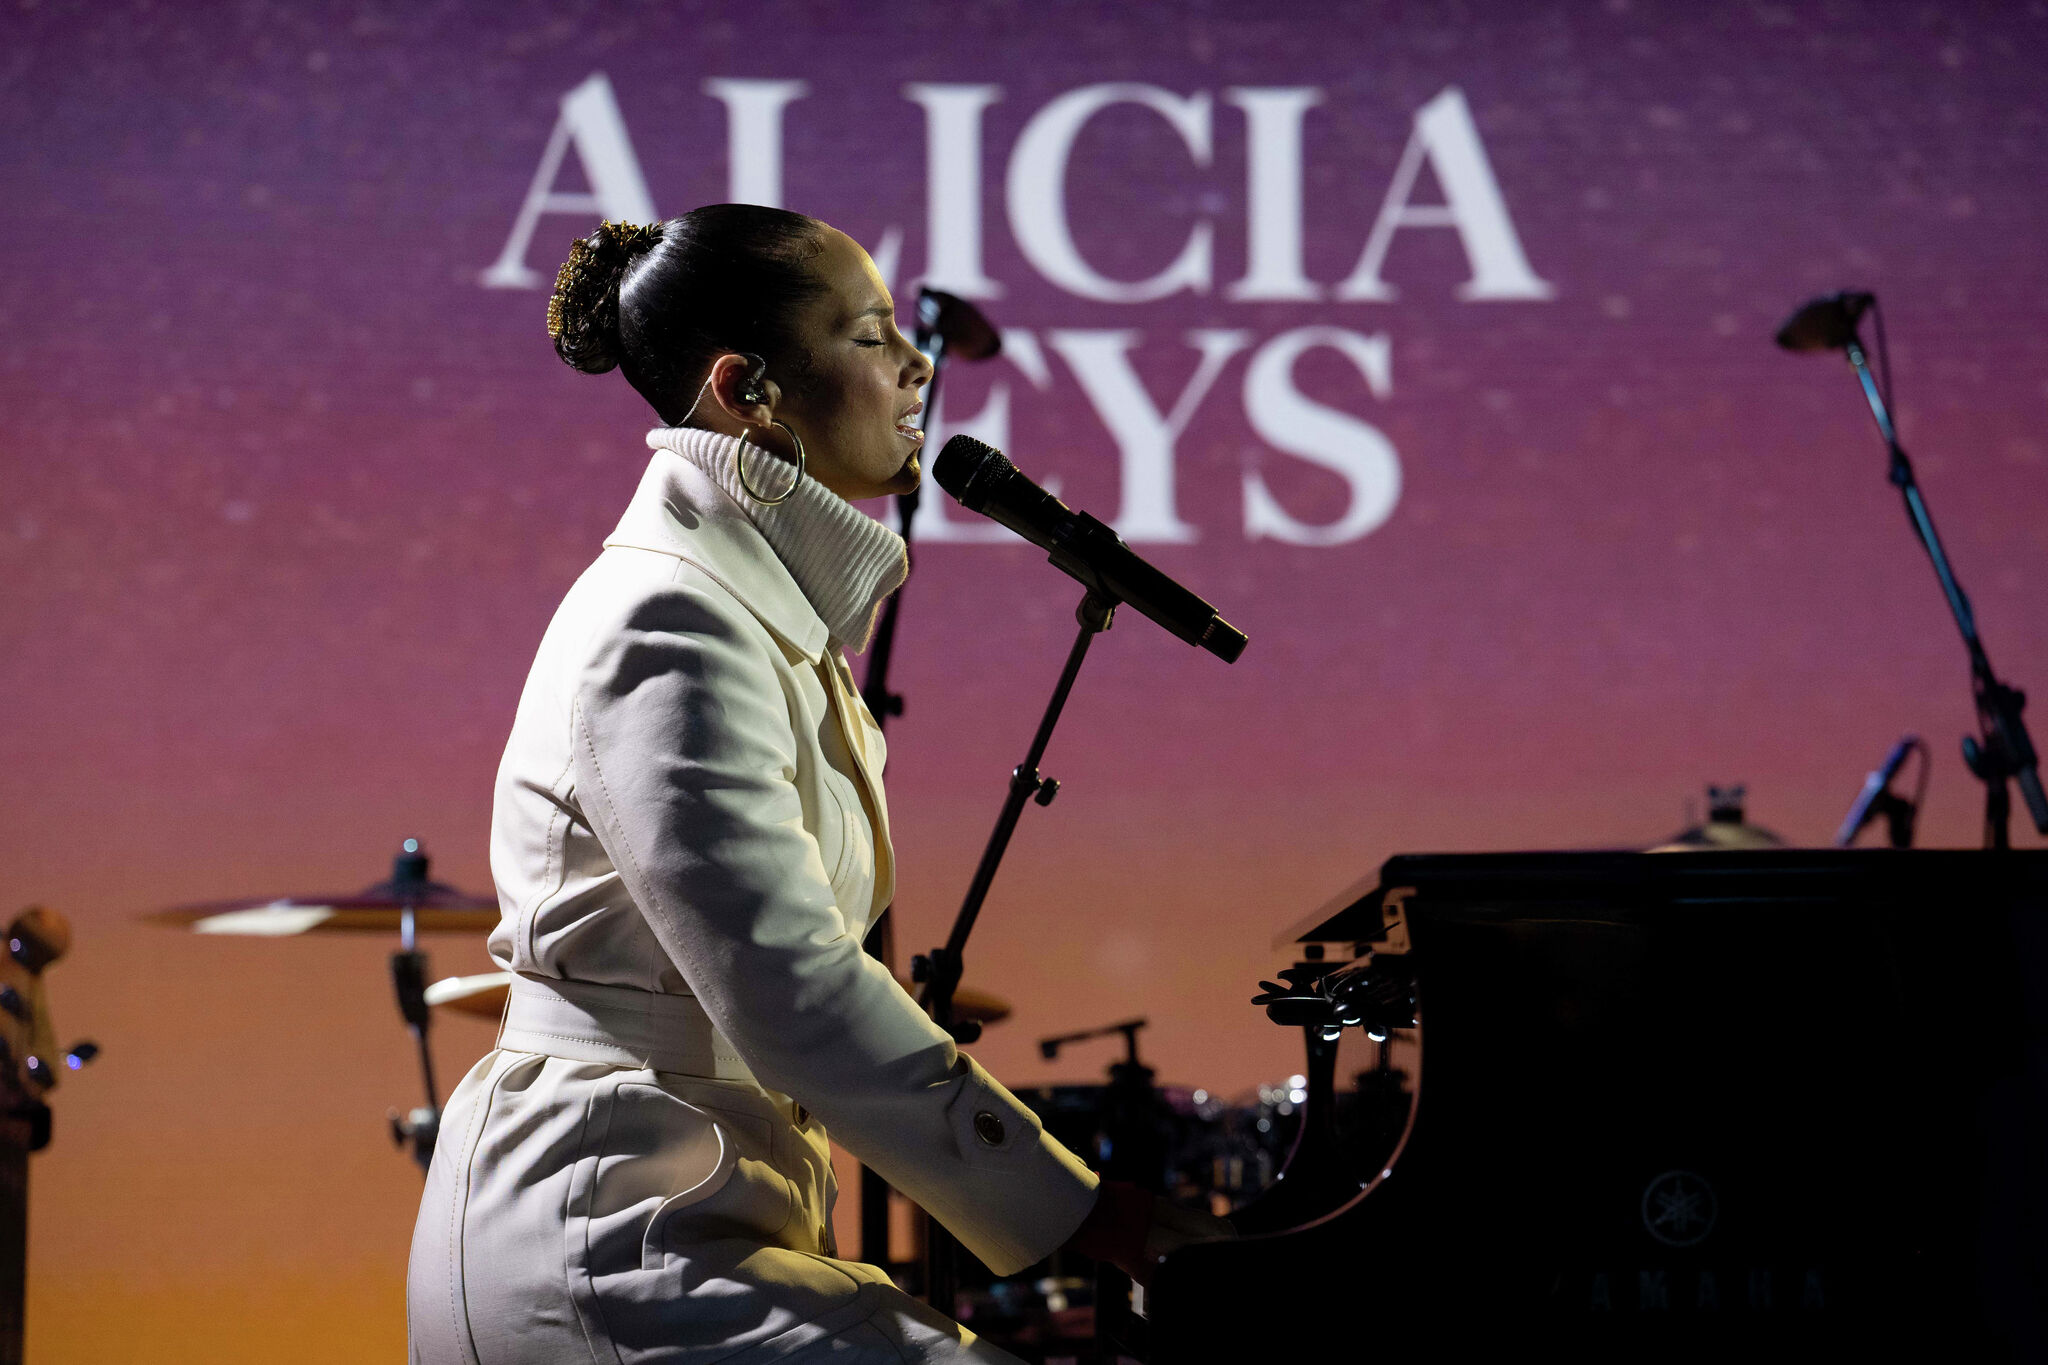 Alicia Keys' 'Keys to the Summer Tour' has Austin date